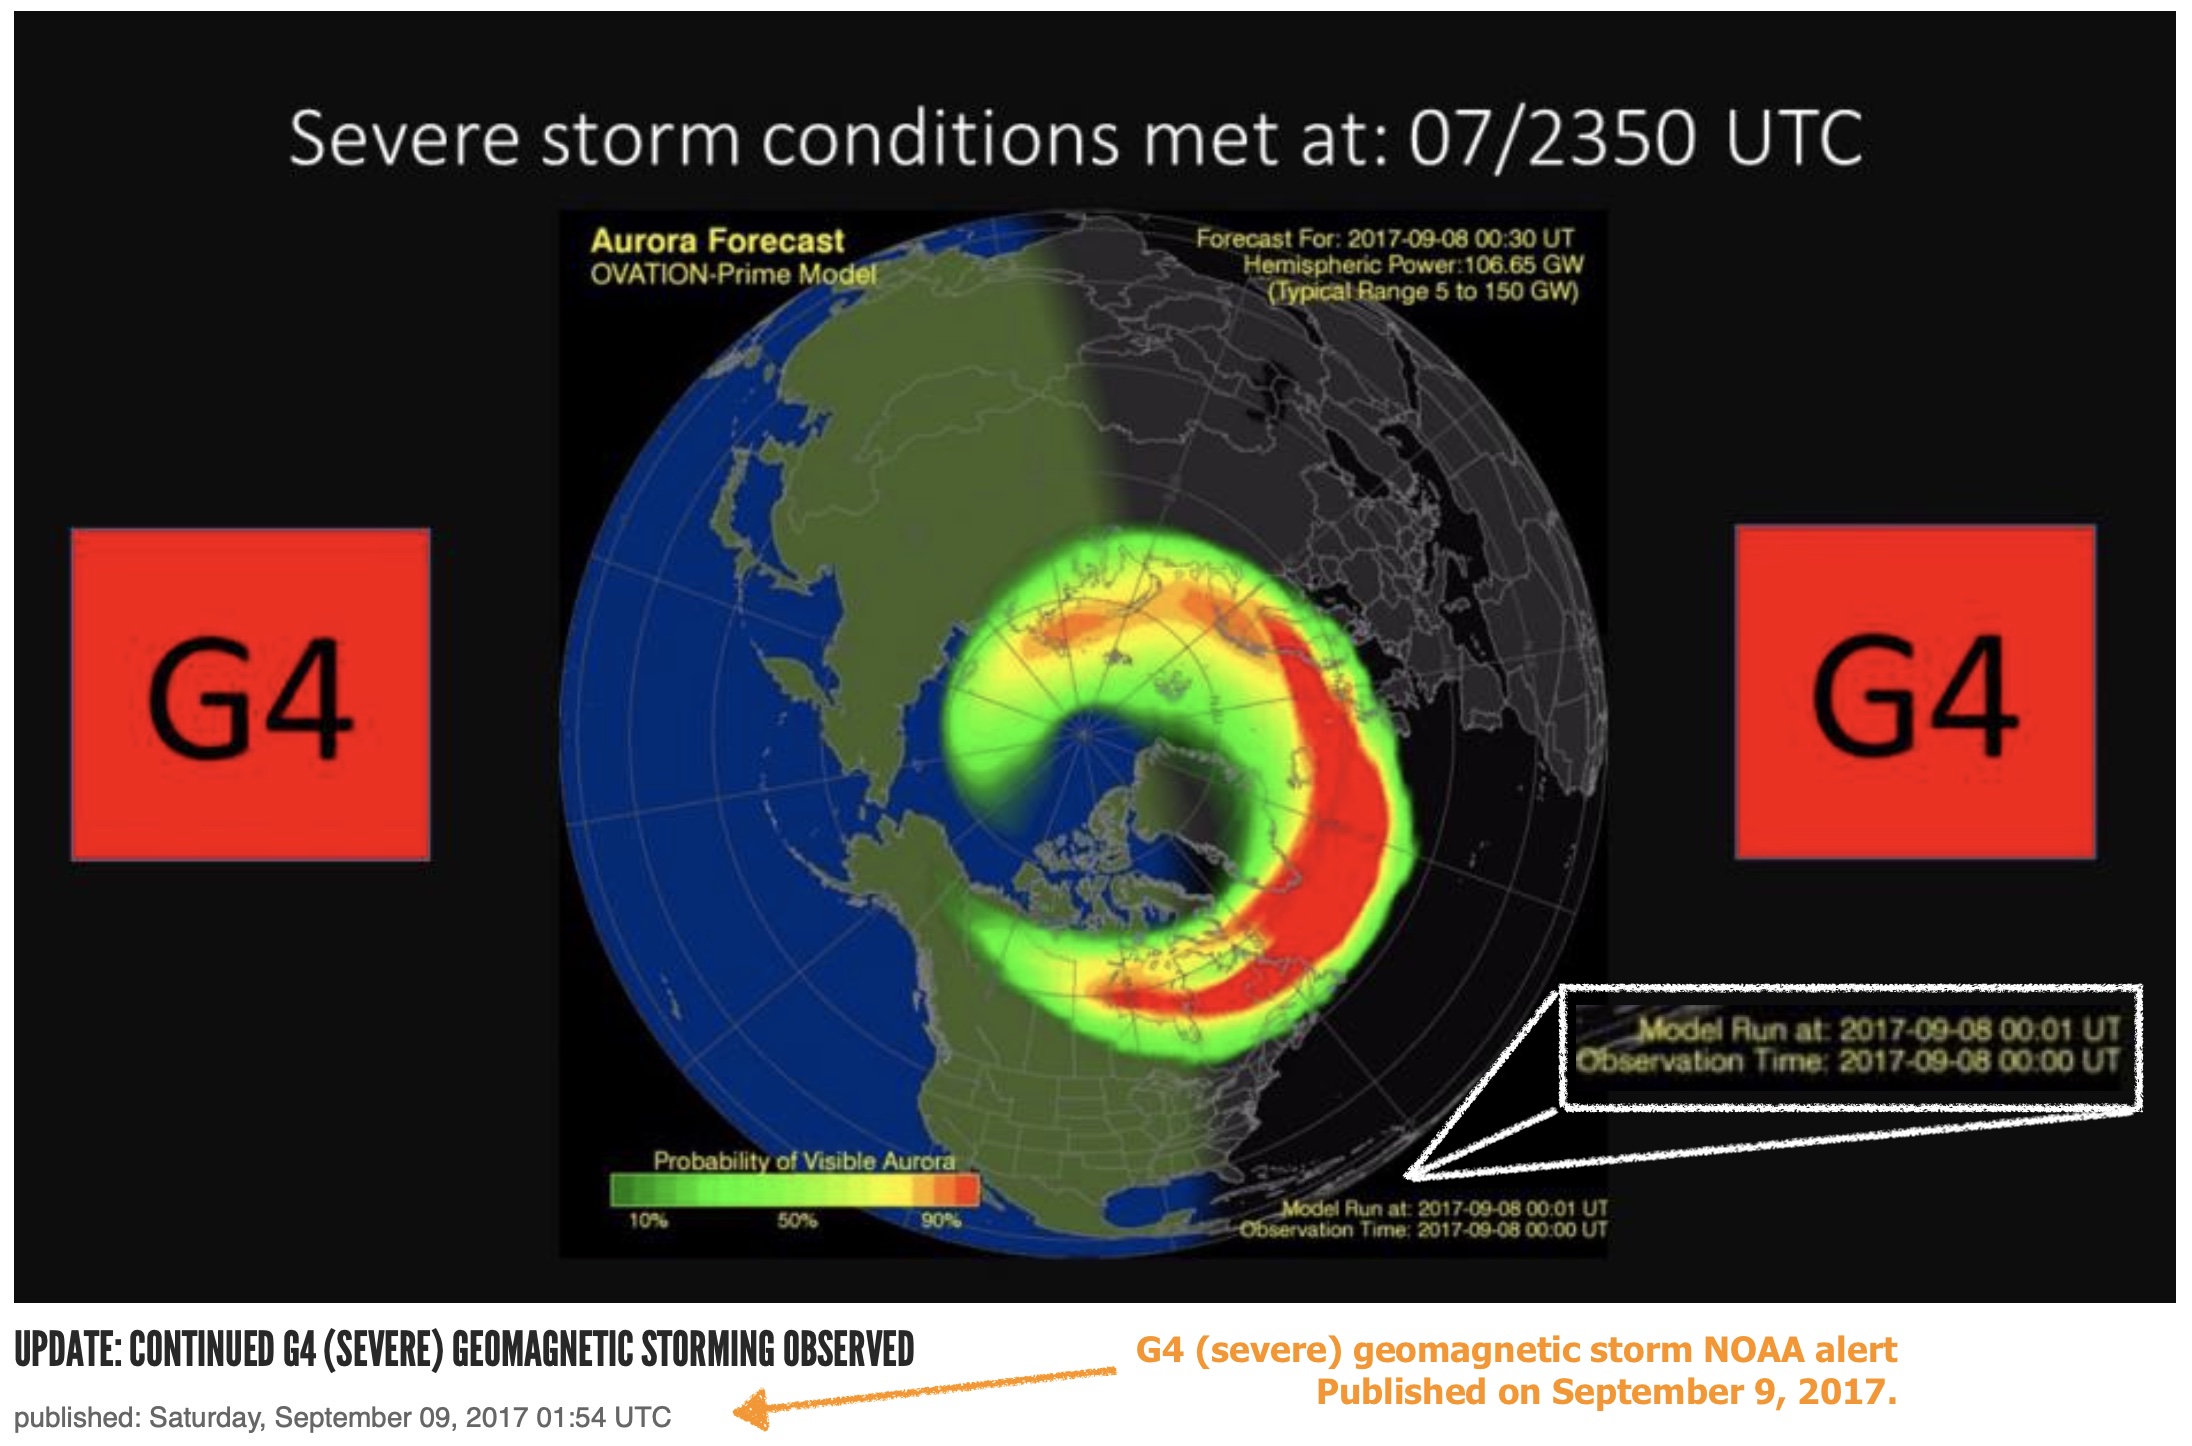 September 9, 2017 NOAA alert for a G4 geomagnetic storm.